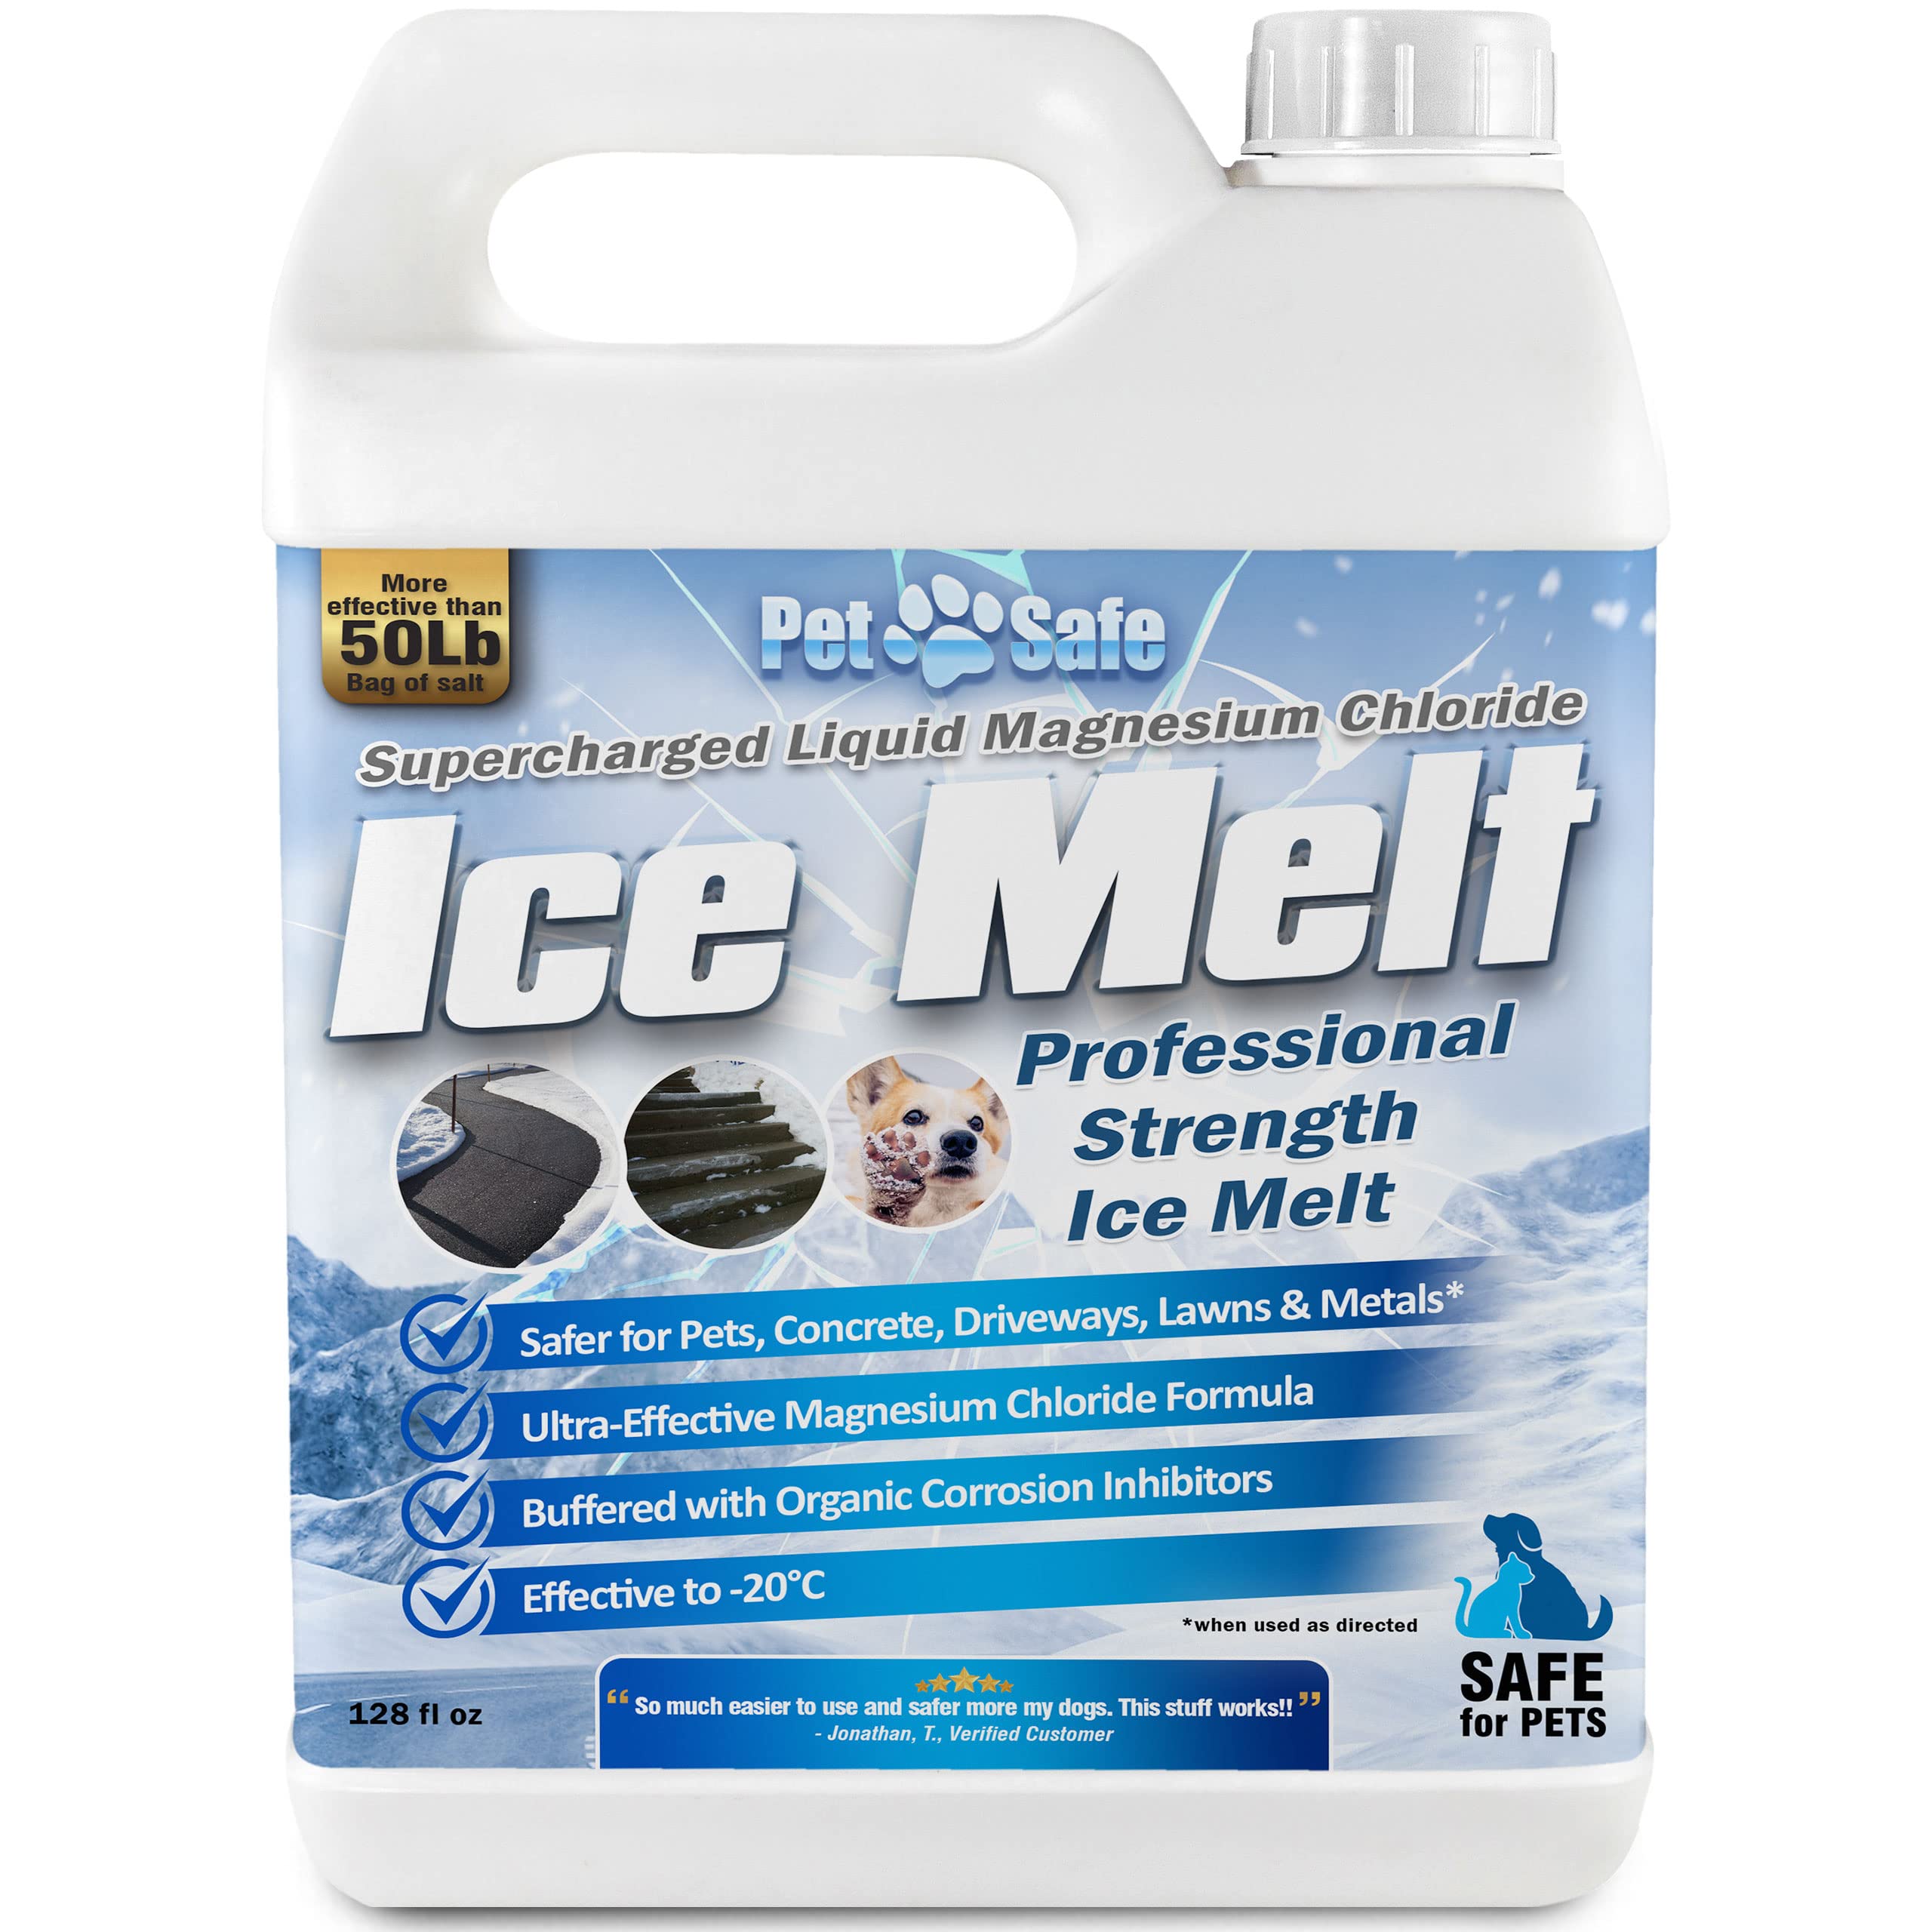 Pet Safe Ice Melt on Amazon